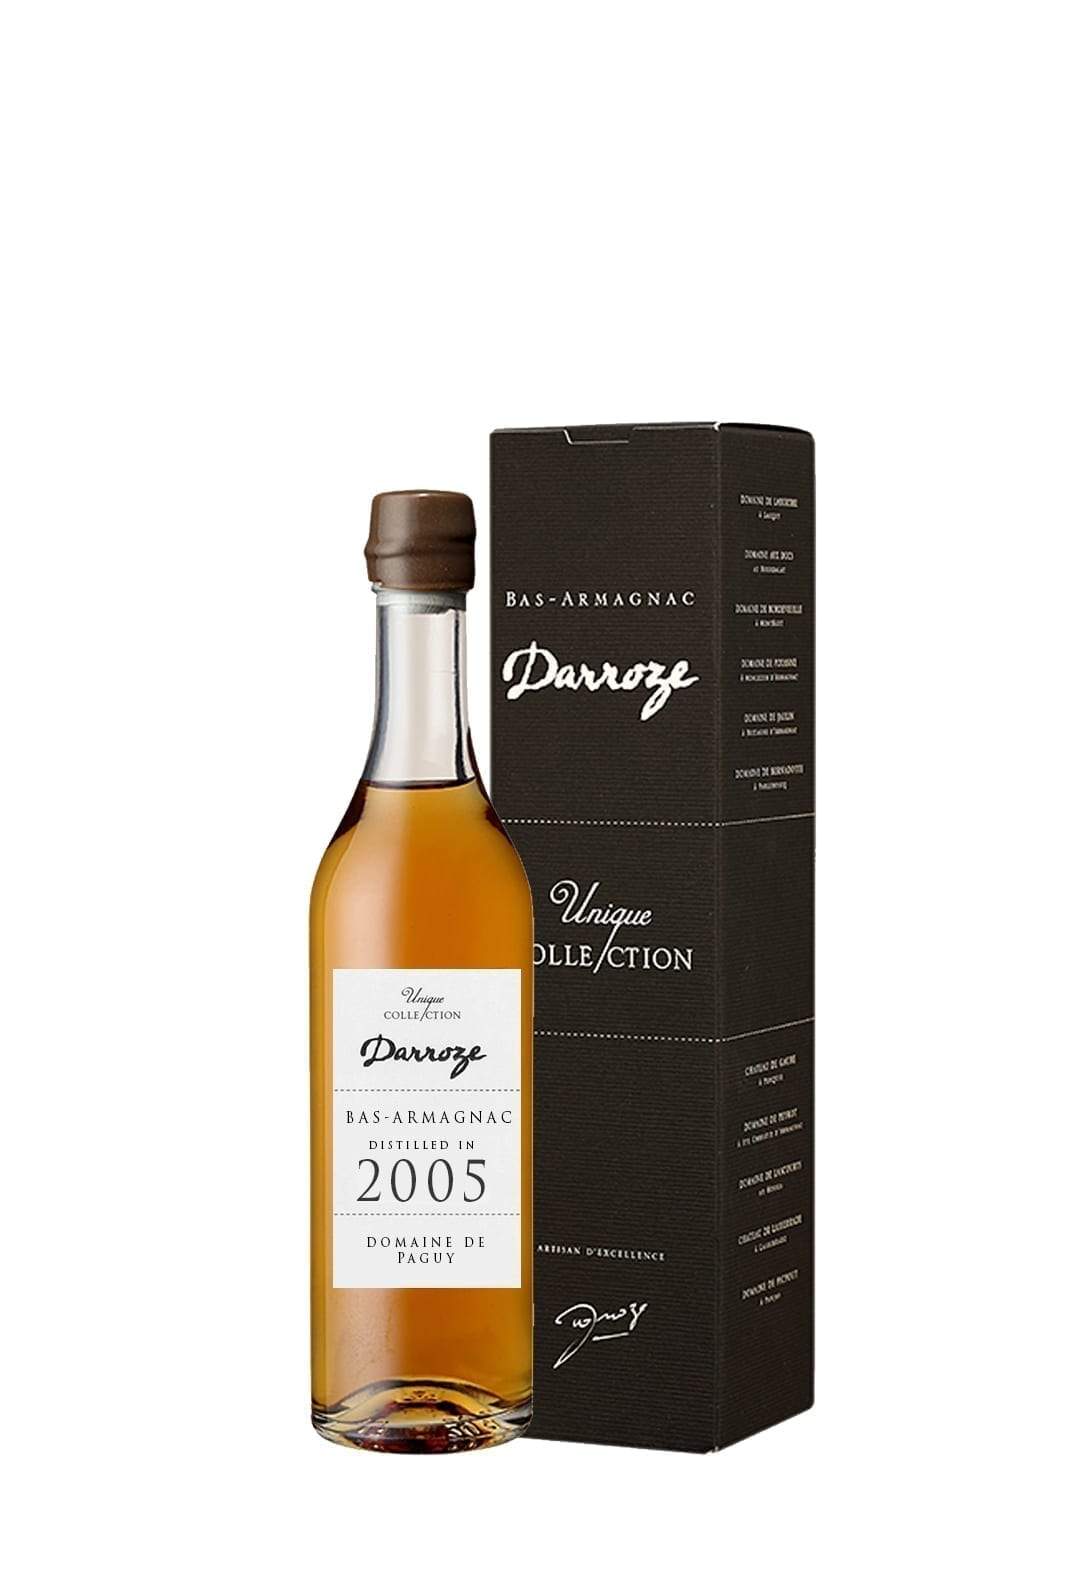 Darroze 2005 Paguy Grand Bas Armagnac 49.7% 200ml | Brandy | Shop online at Spirits of France